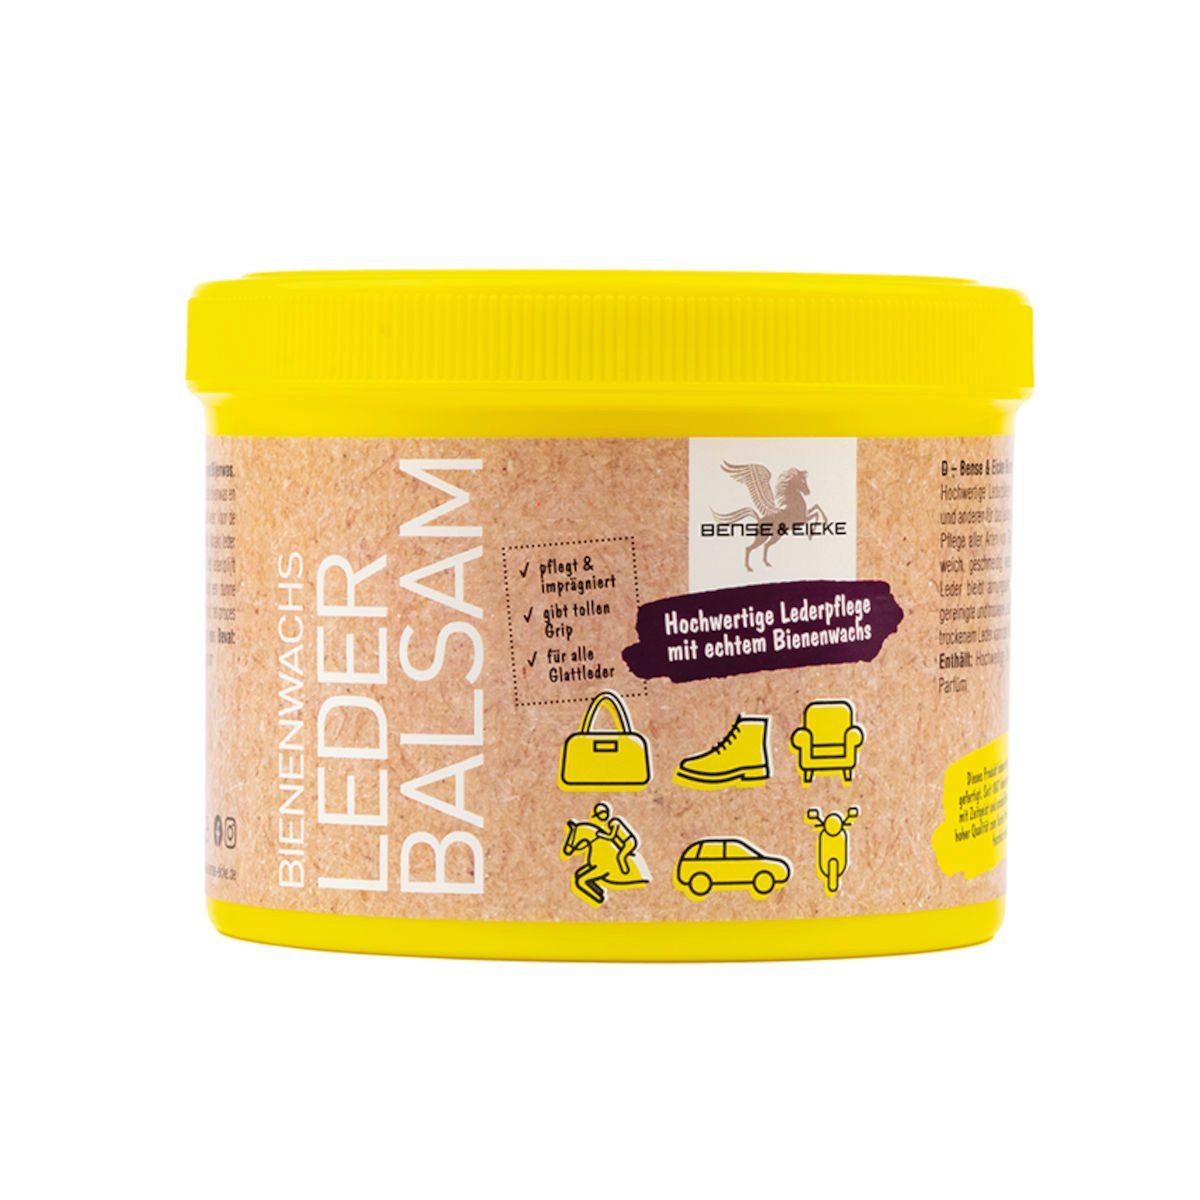 Bense & Eicke Bienenwachs-Lederpflege-Balsam - 500 ml Lederbalsam (Packung)